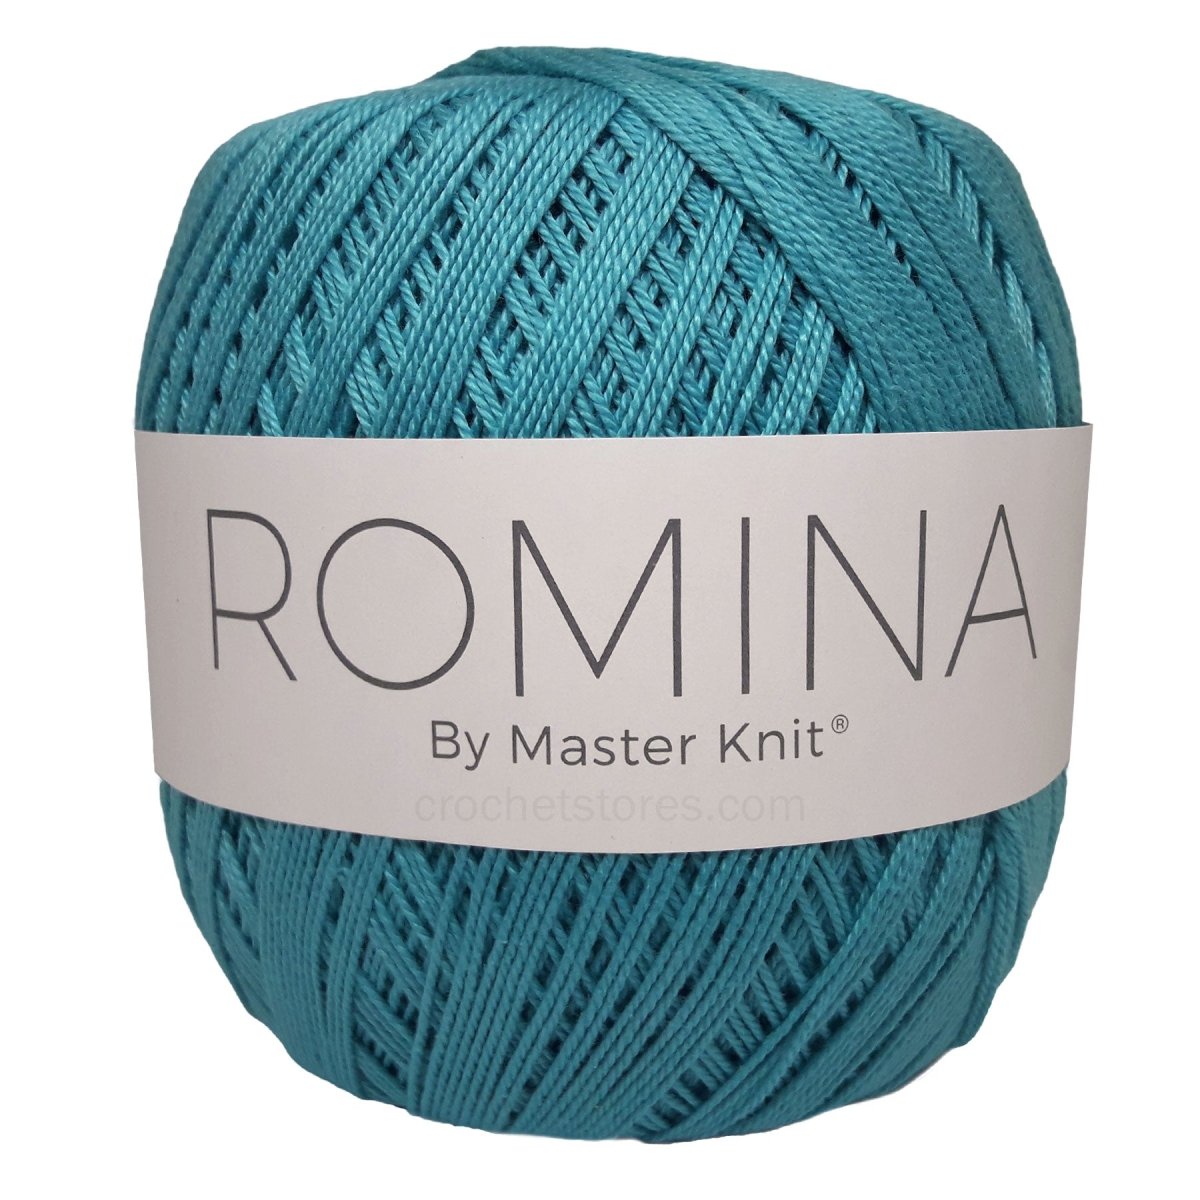 ROMINA - Crochetstores9335-130745051438470